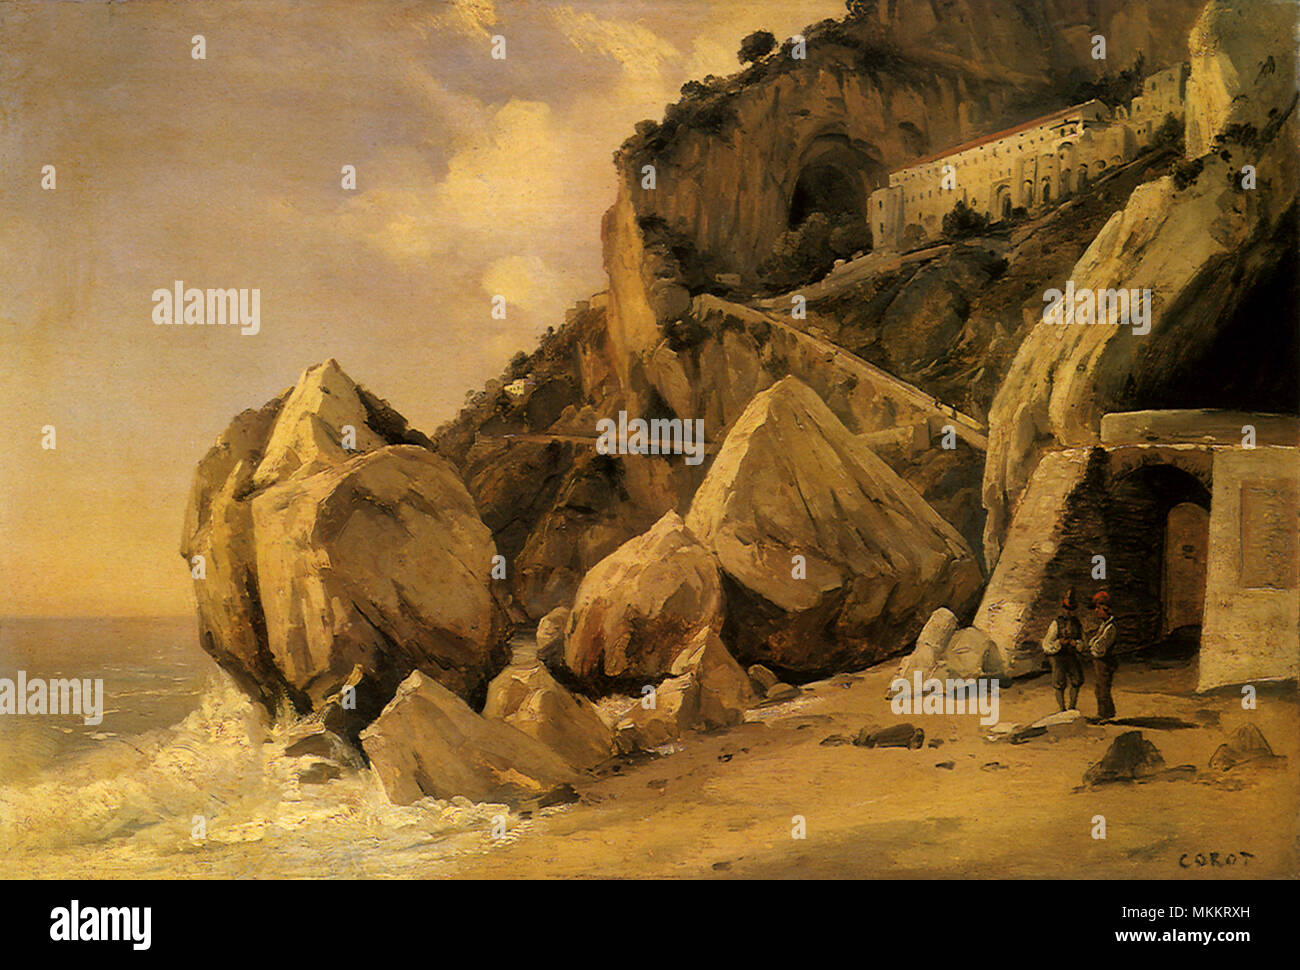 Männer und Felsen an Grotte Stockfoto